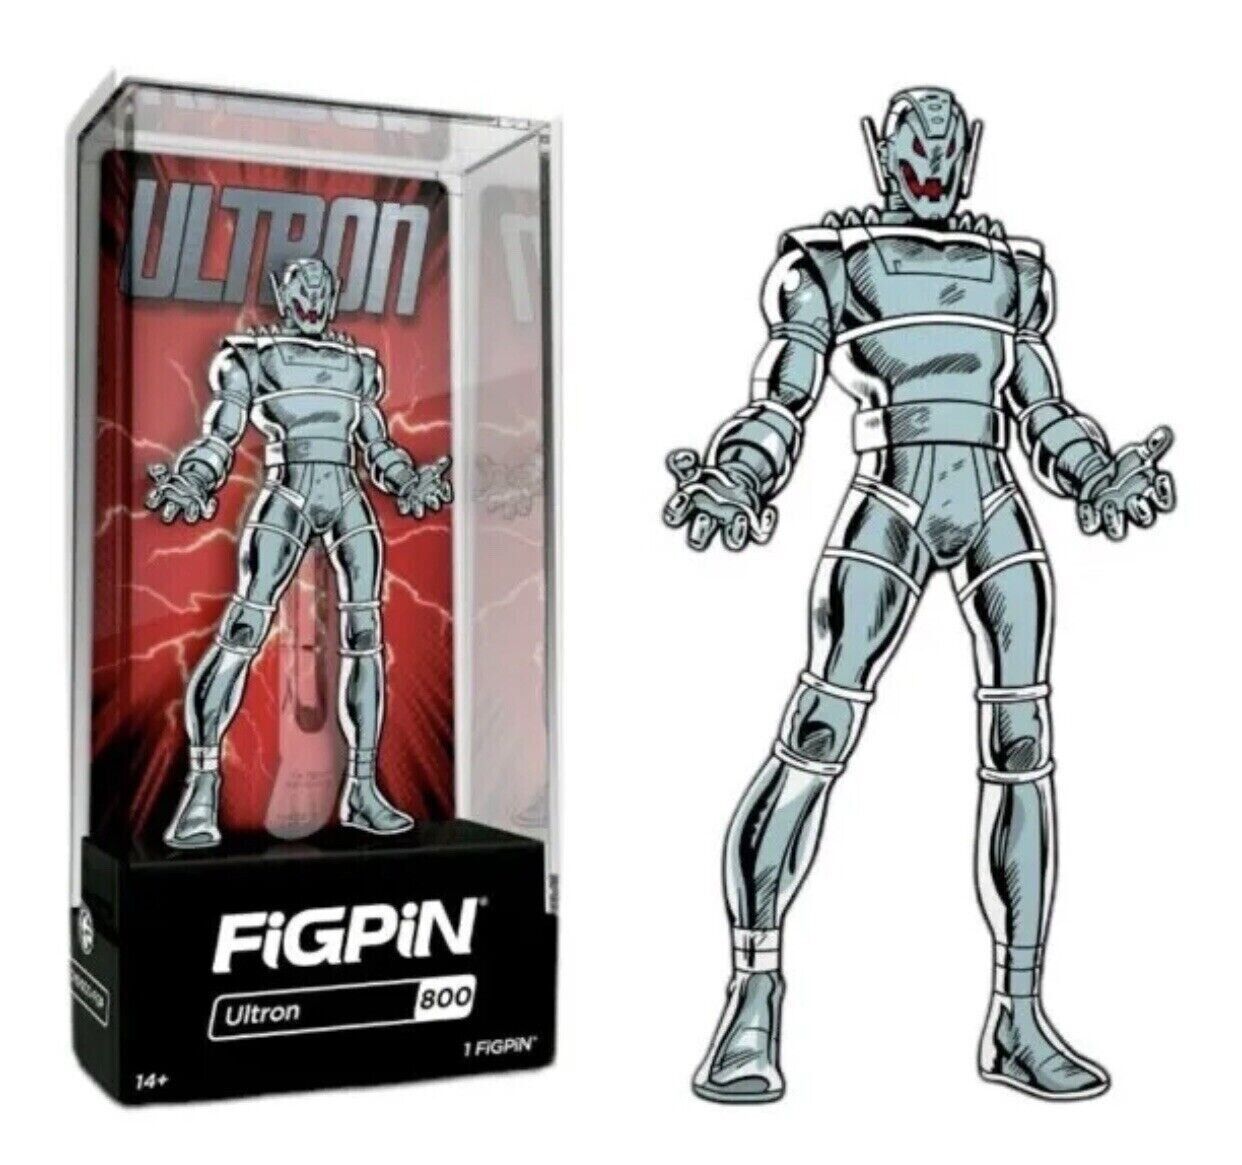 Funko Pop FiGPin Ultron #800 Enamel Pin - Marvel Comics Classic Series New